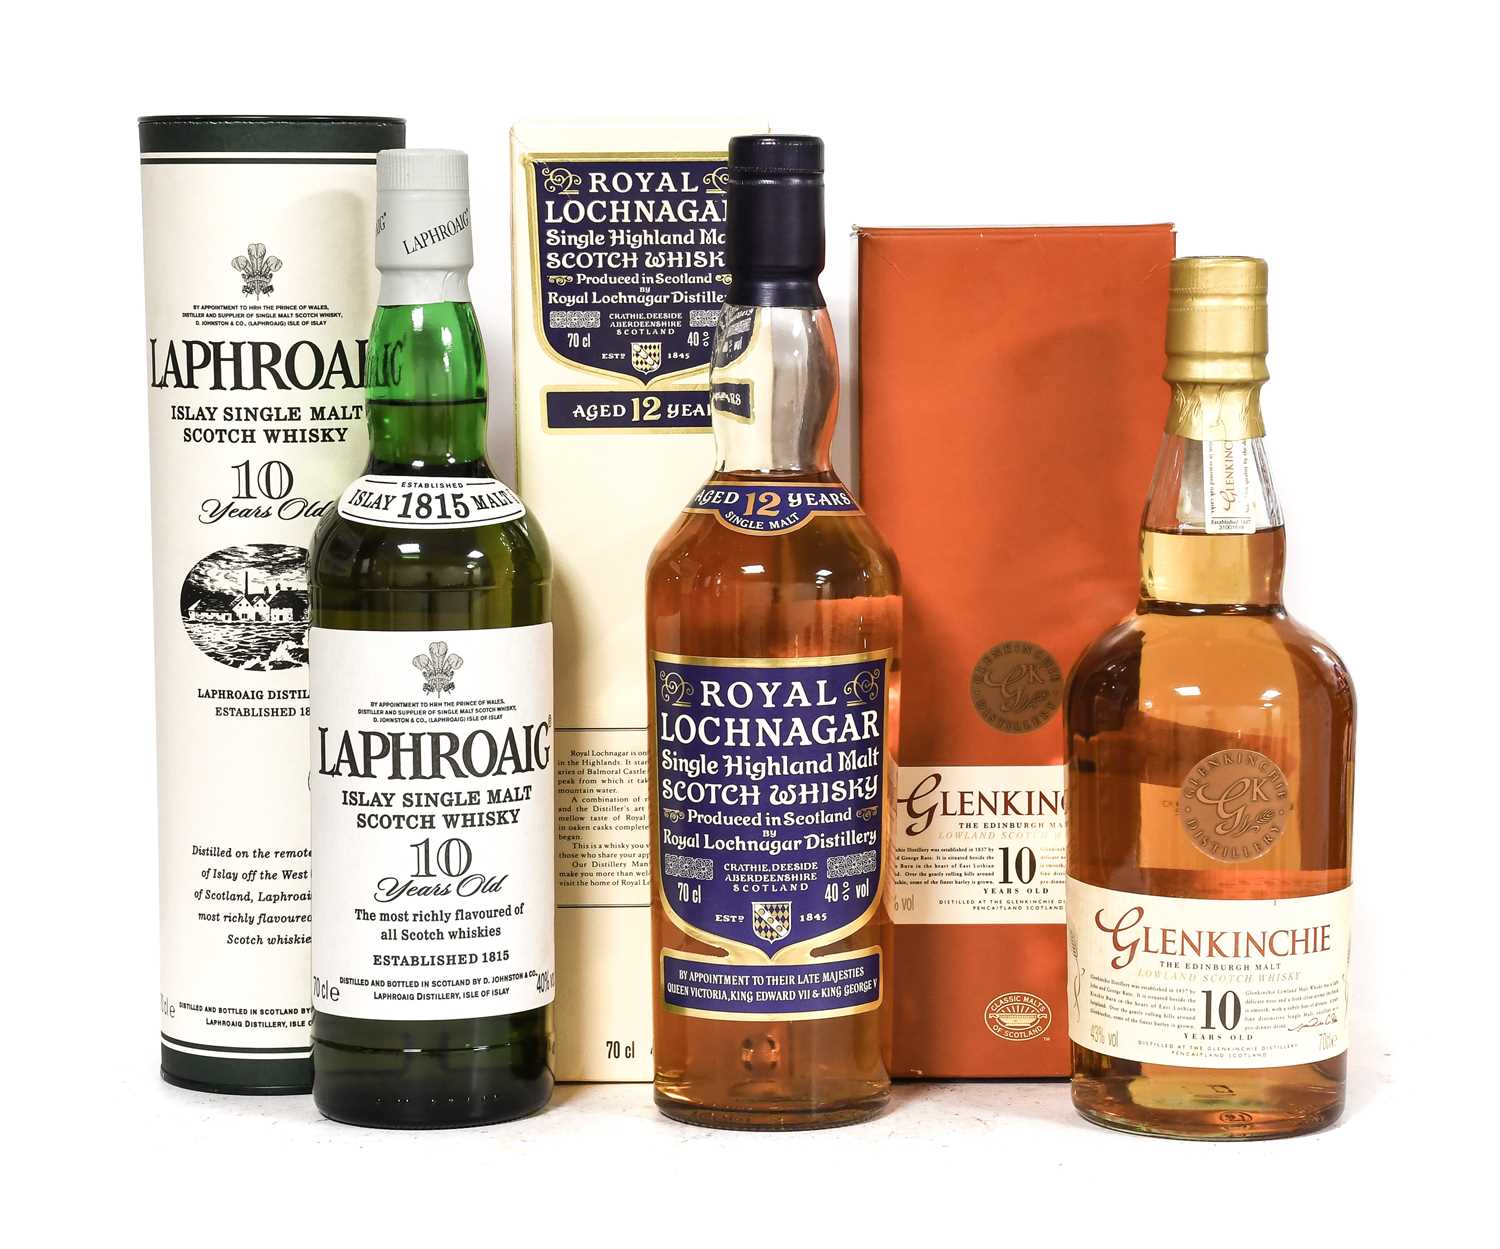 Laphroaig 10 Years Old Single Islay Malt Scotch Whisky, 40% 70cl (one bottle), Royal Lochnagar 12 - Image 5 of 5